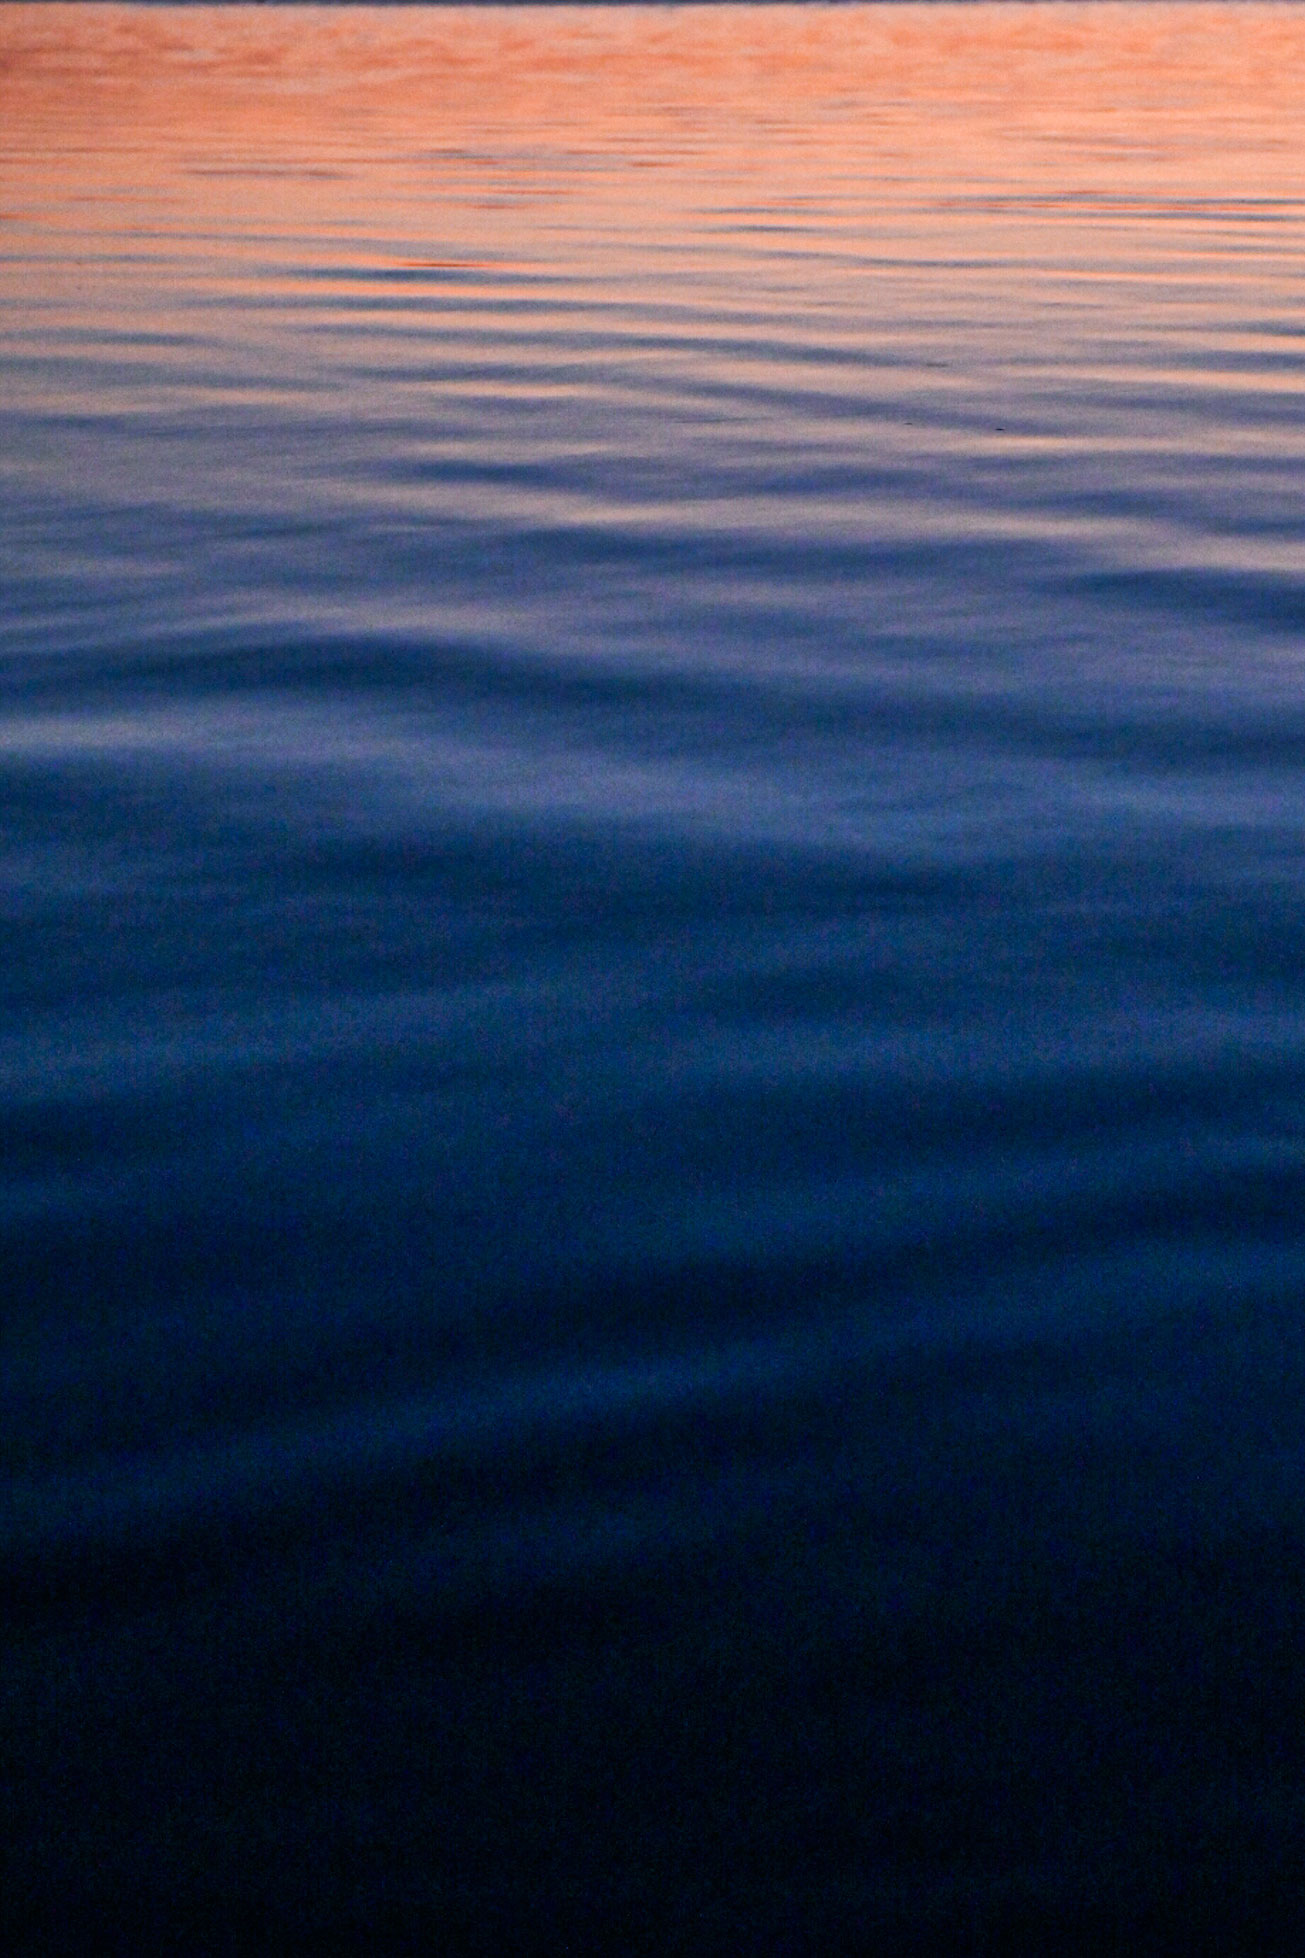 Orange light from sunrise reflected across the water in Reggio